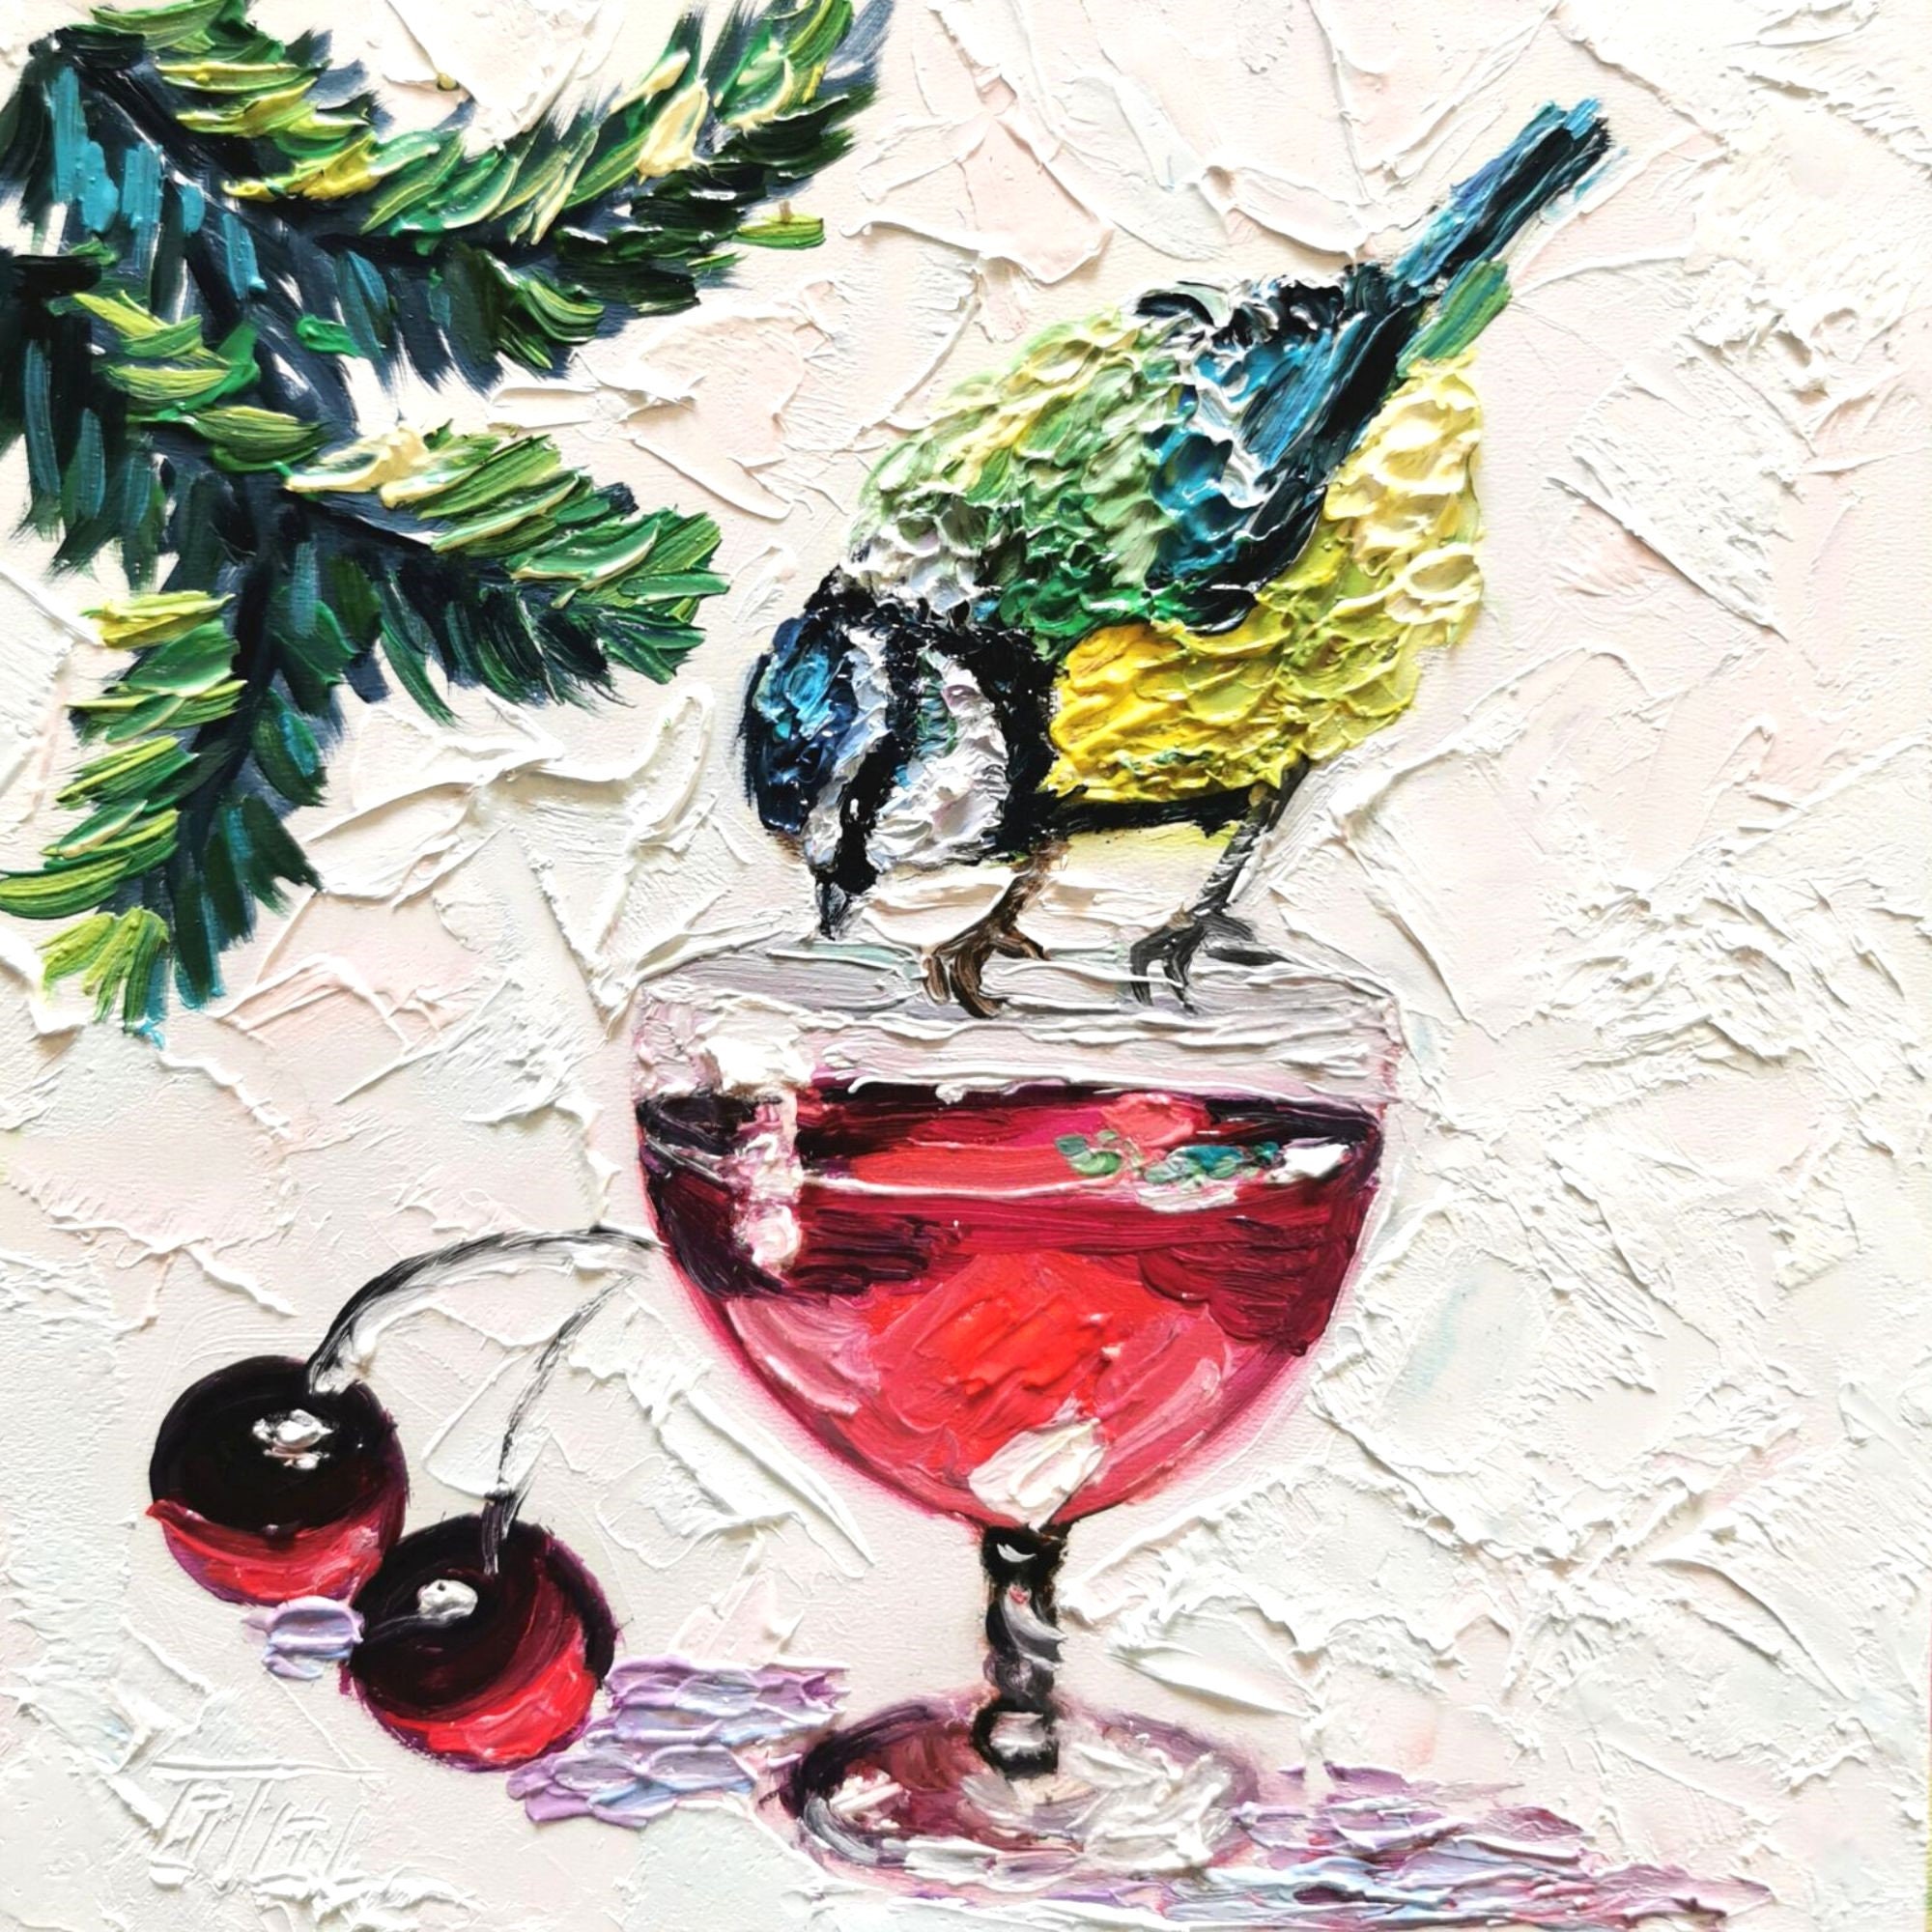 Christmas Bird Coasters, Set of 4 Coasters, Cardinal, Chickadee,  Woodpecker, Hummingbird